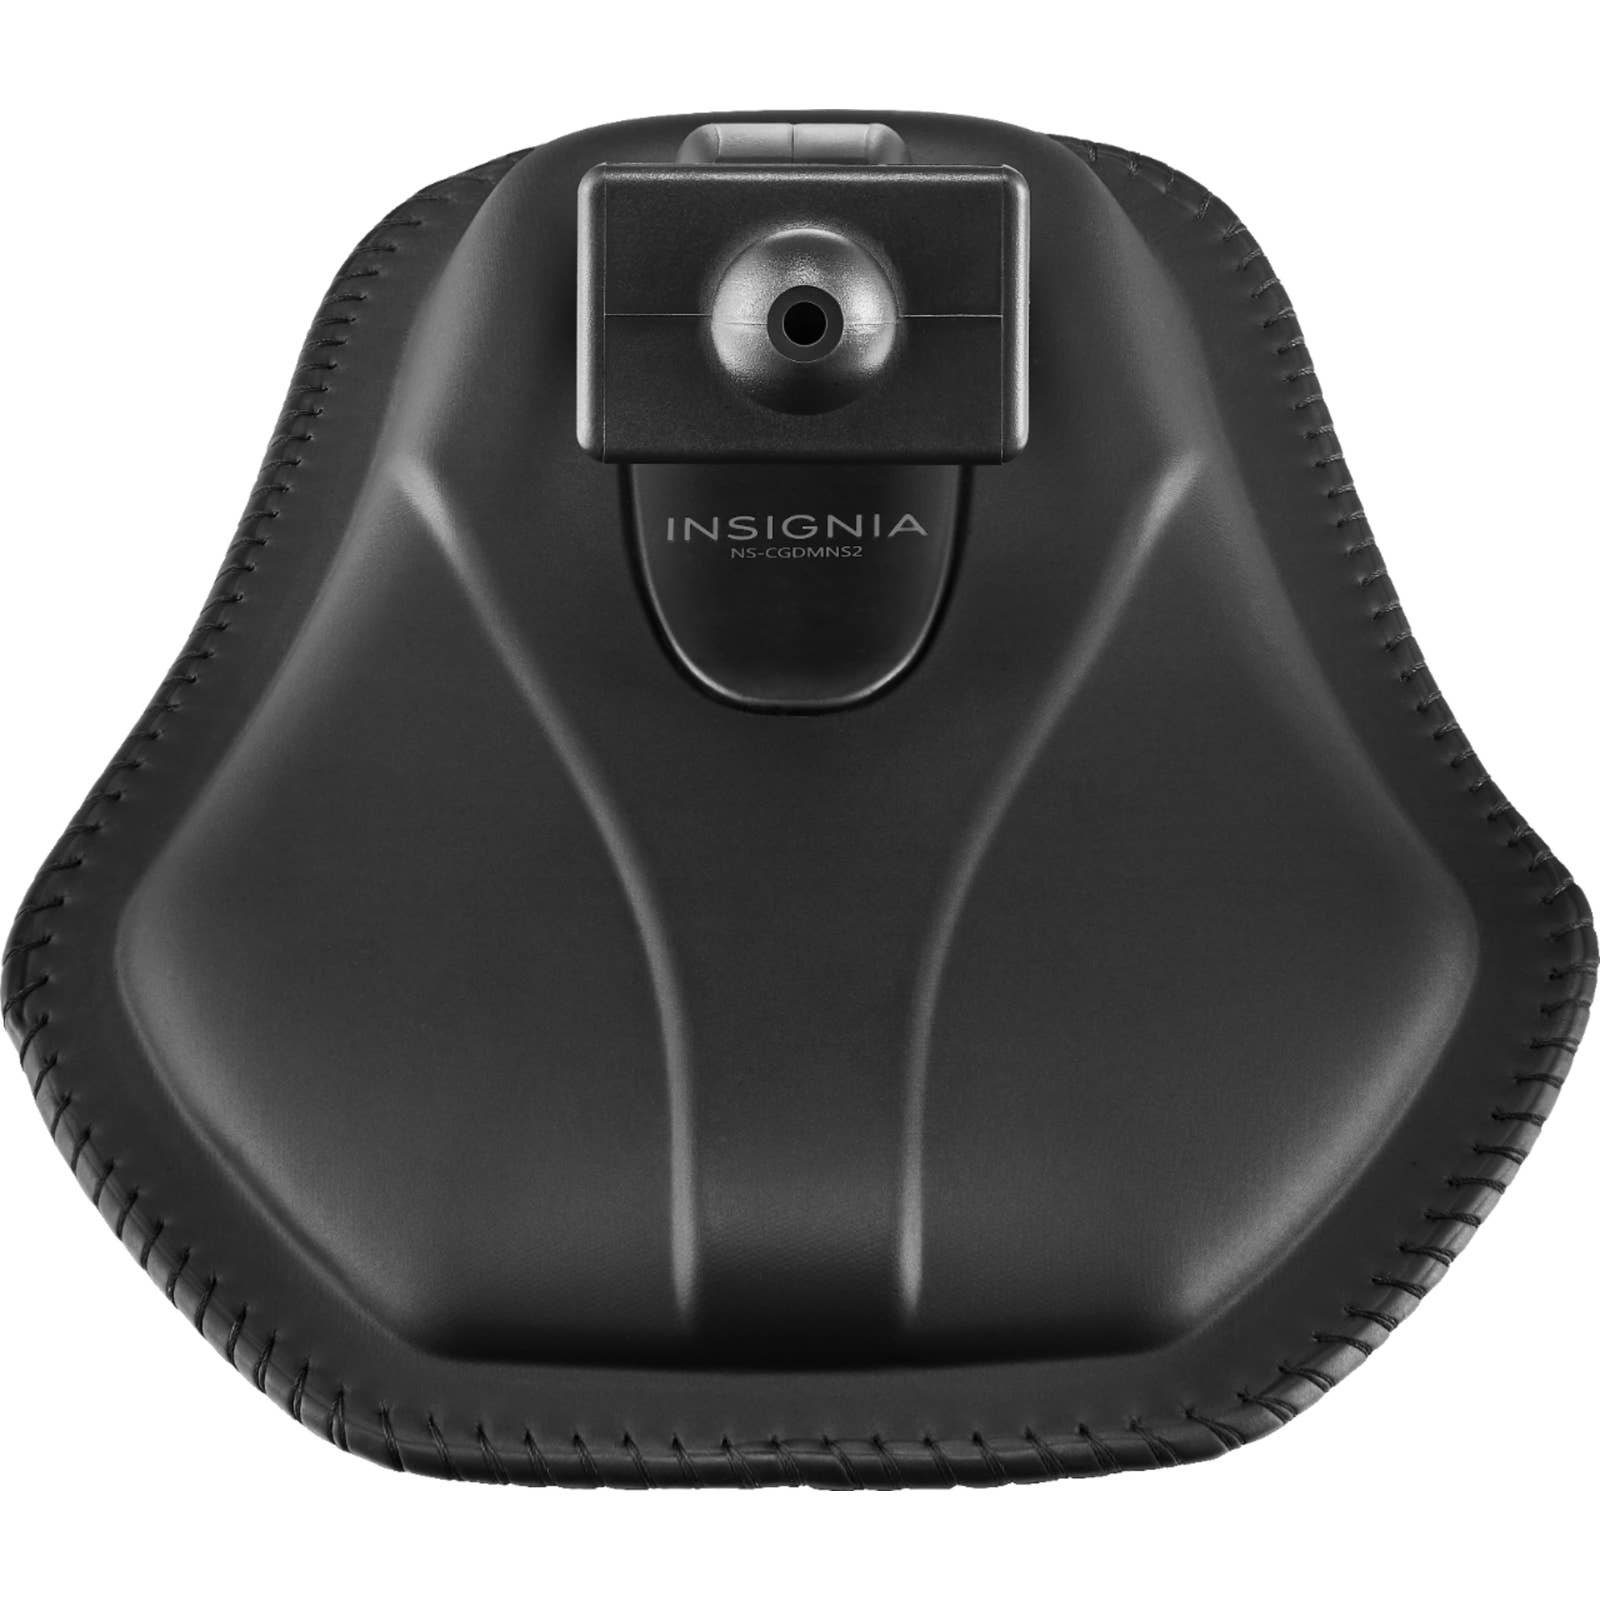 Insignia™ - NS-CGDMNS2 Friction Dashboard Mount for Garmin nüvi GPS- Black